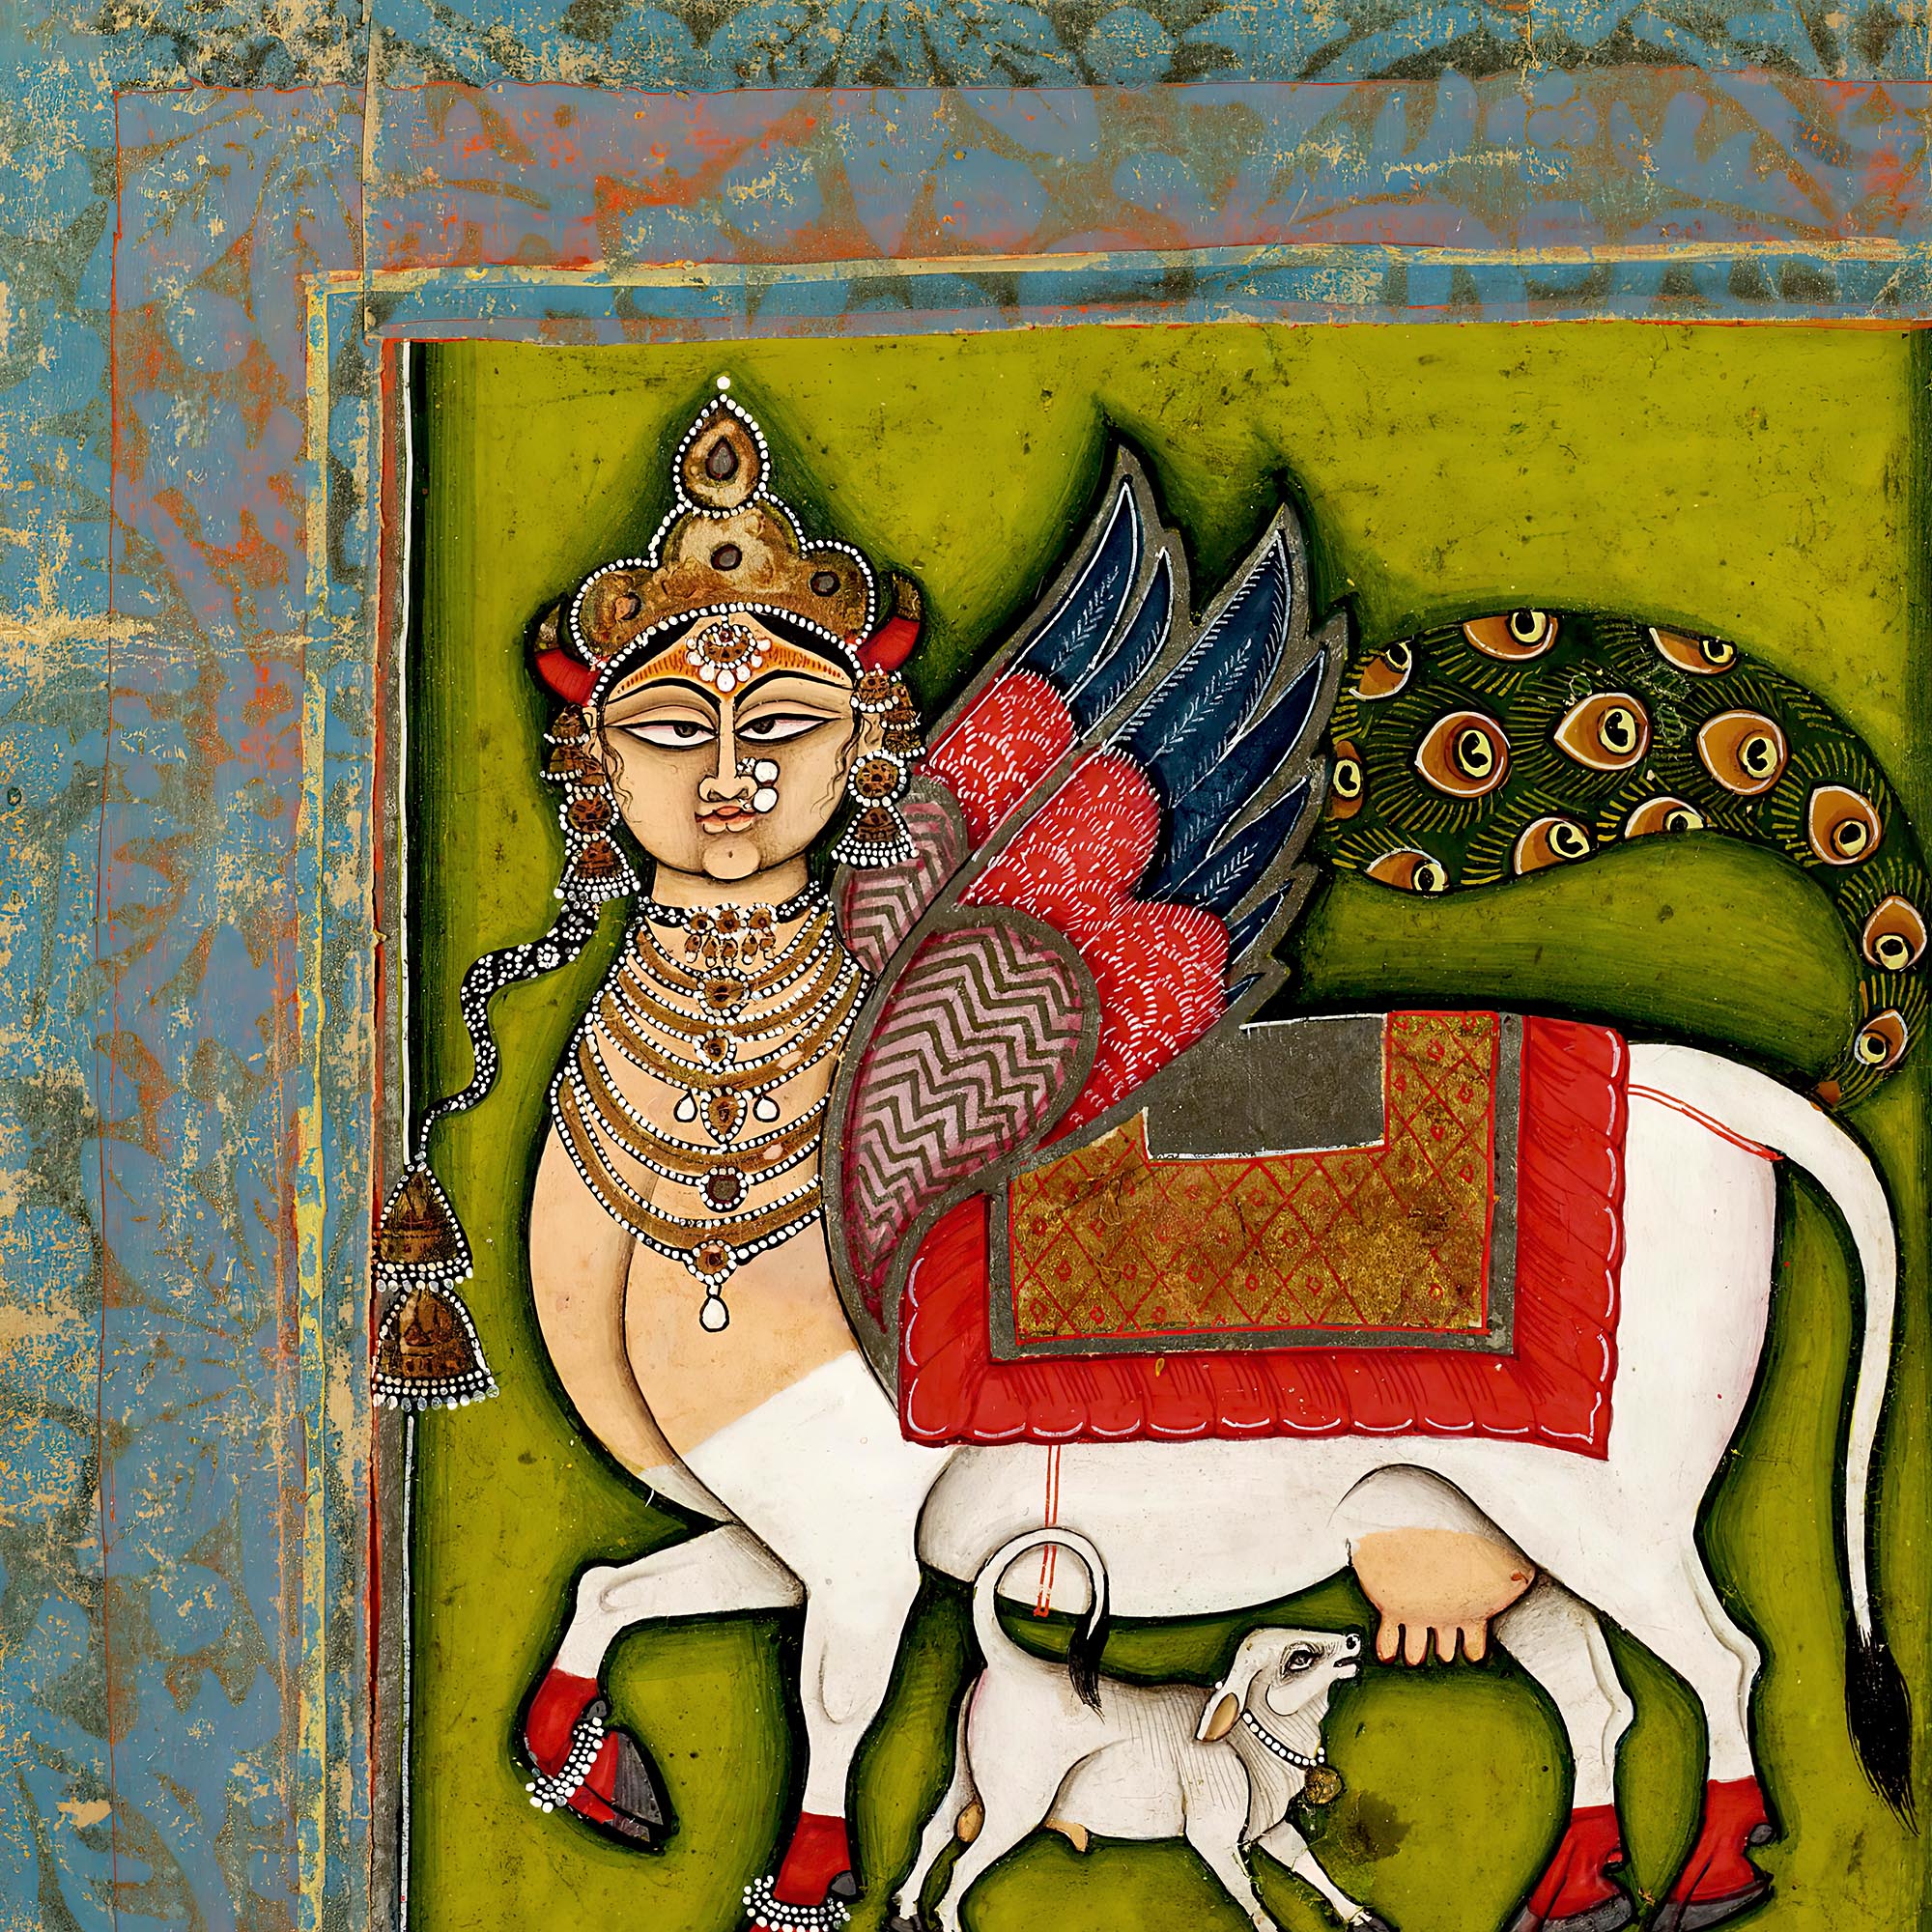 Fine art 12"x12" / Black Frame Wish Granting Cow! | Sacred Cow Mystical Chimera | Hindu Mythology and Islamic Art Colorful Fusion Framed Art Print